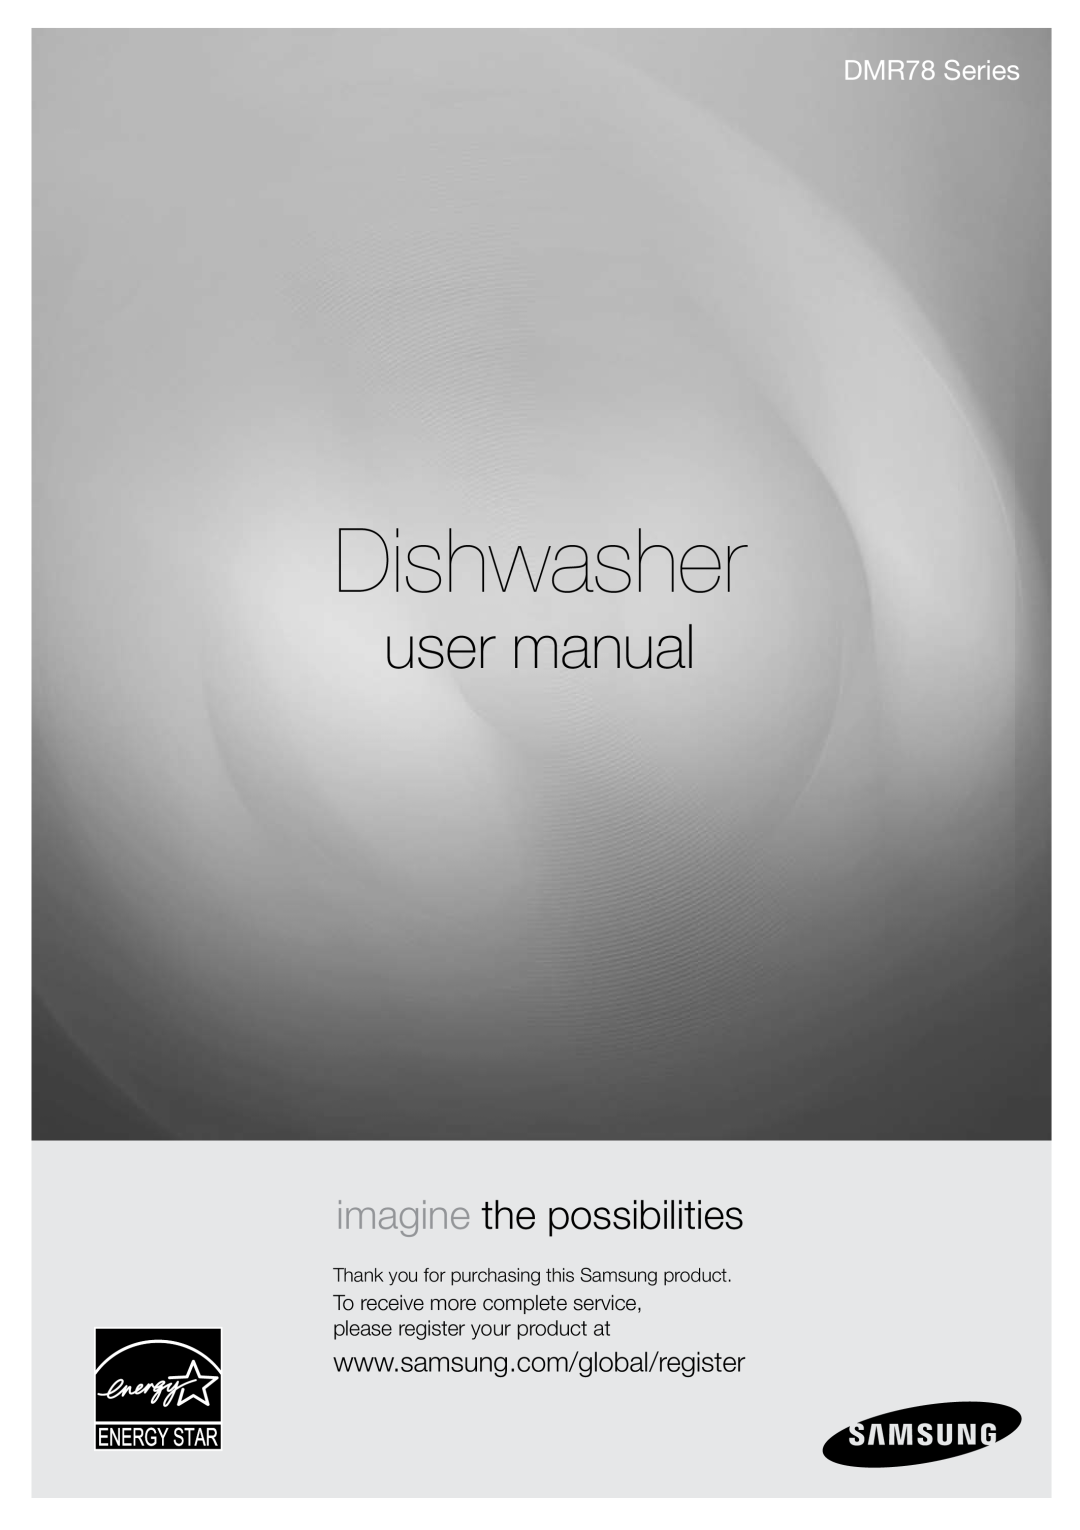 Samsung manual Dishwasher, user manual, imagine the possibilities, DMR78 Series 